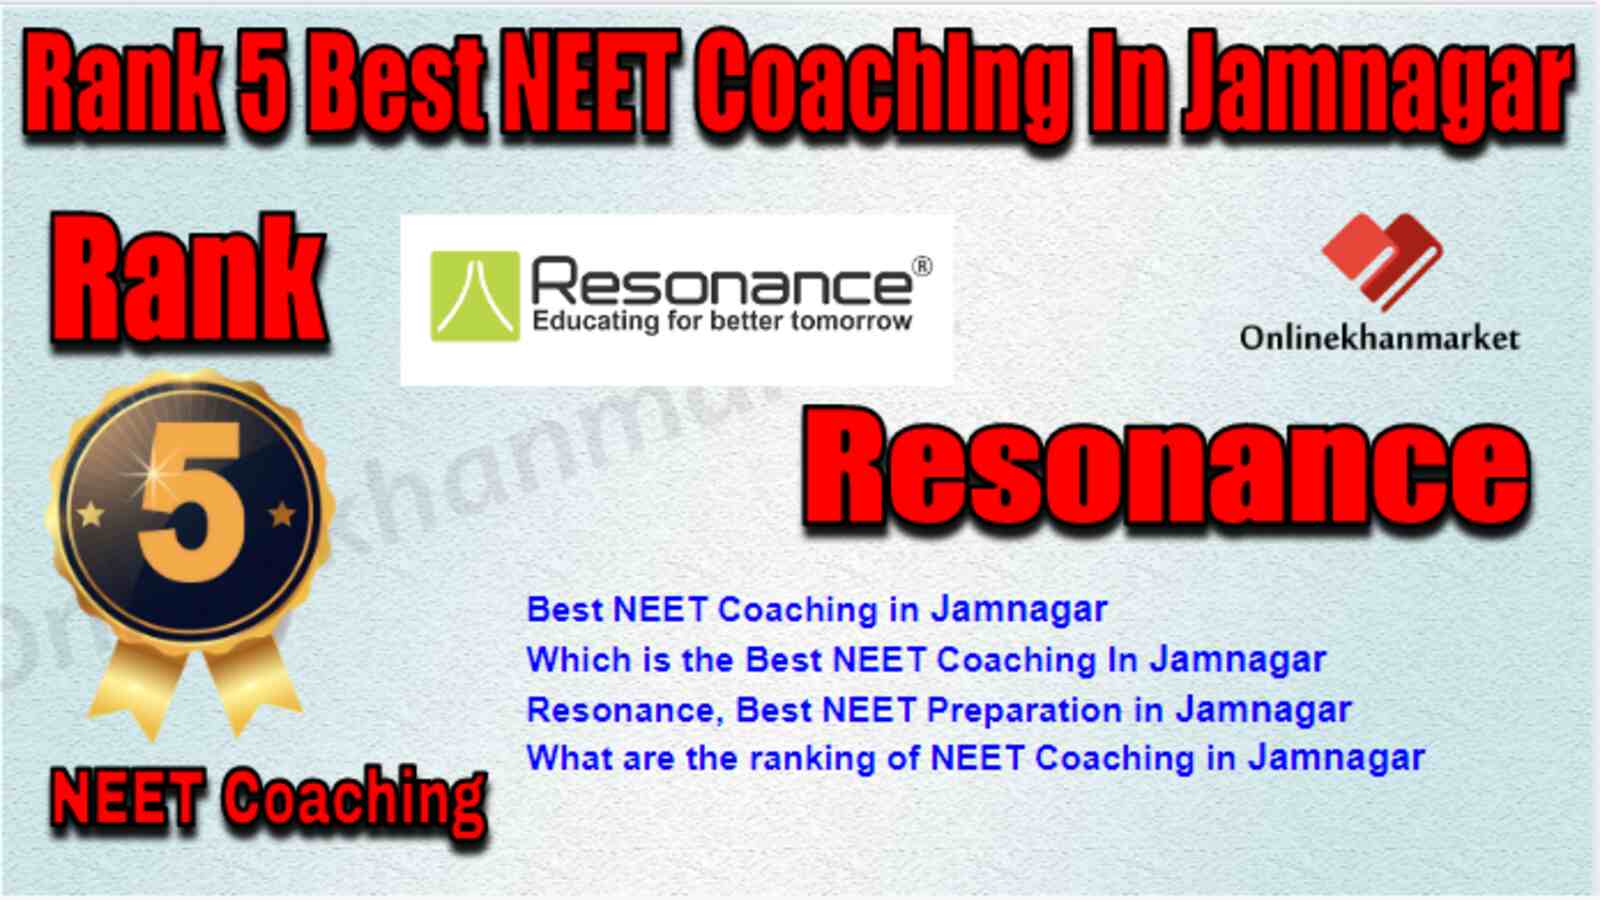 Rank 5 Best NEET Coaching in Jamnagar